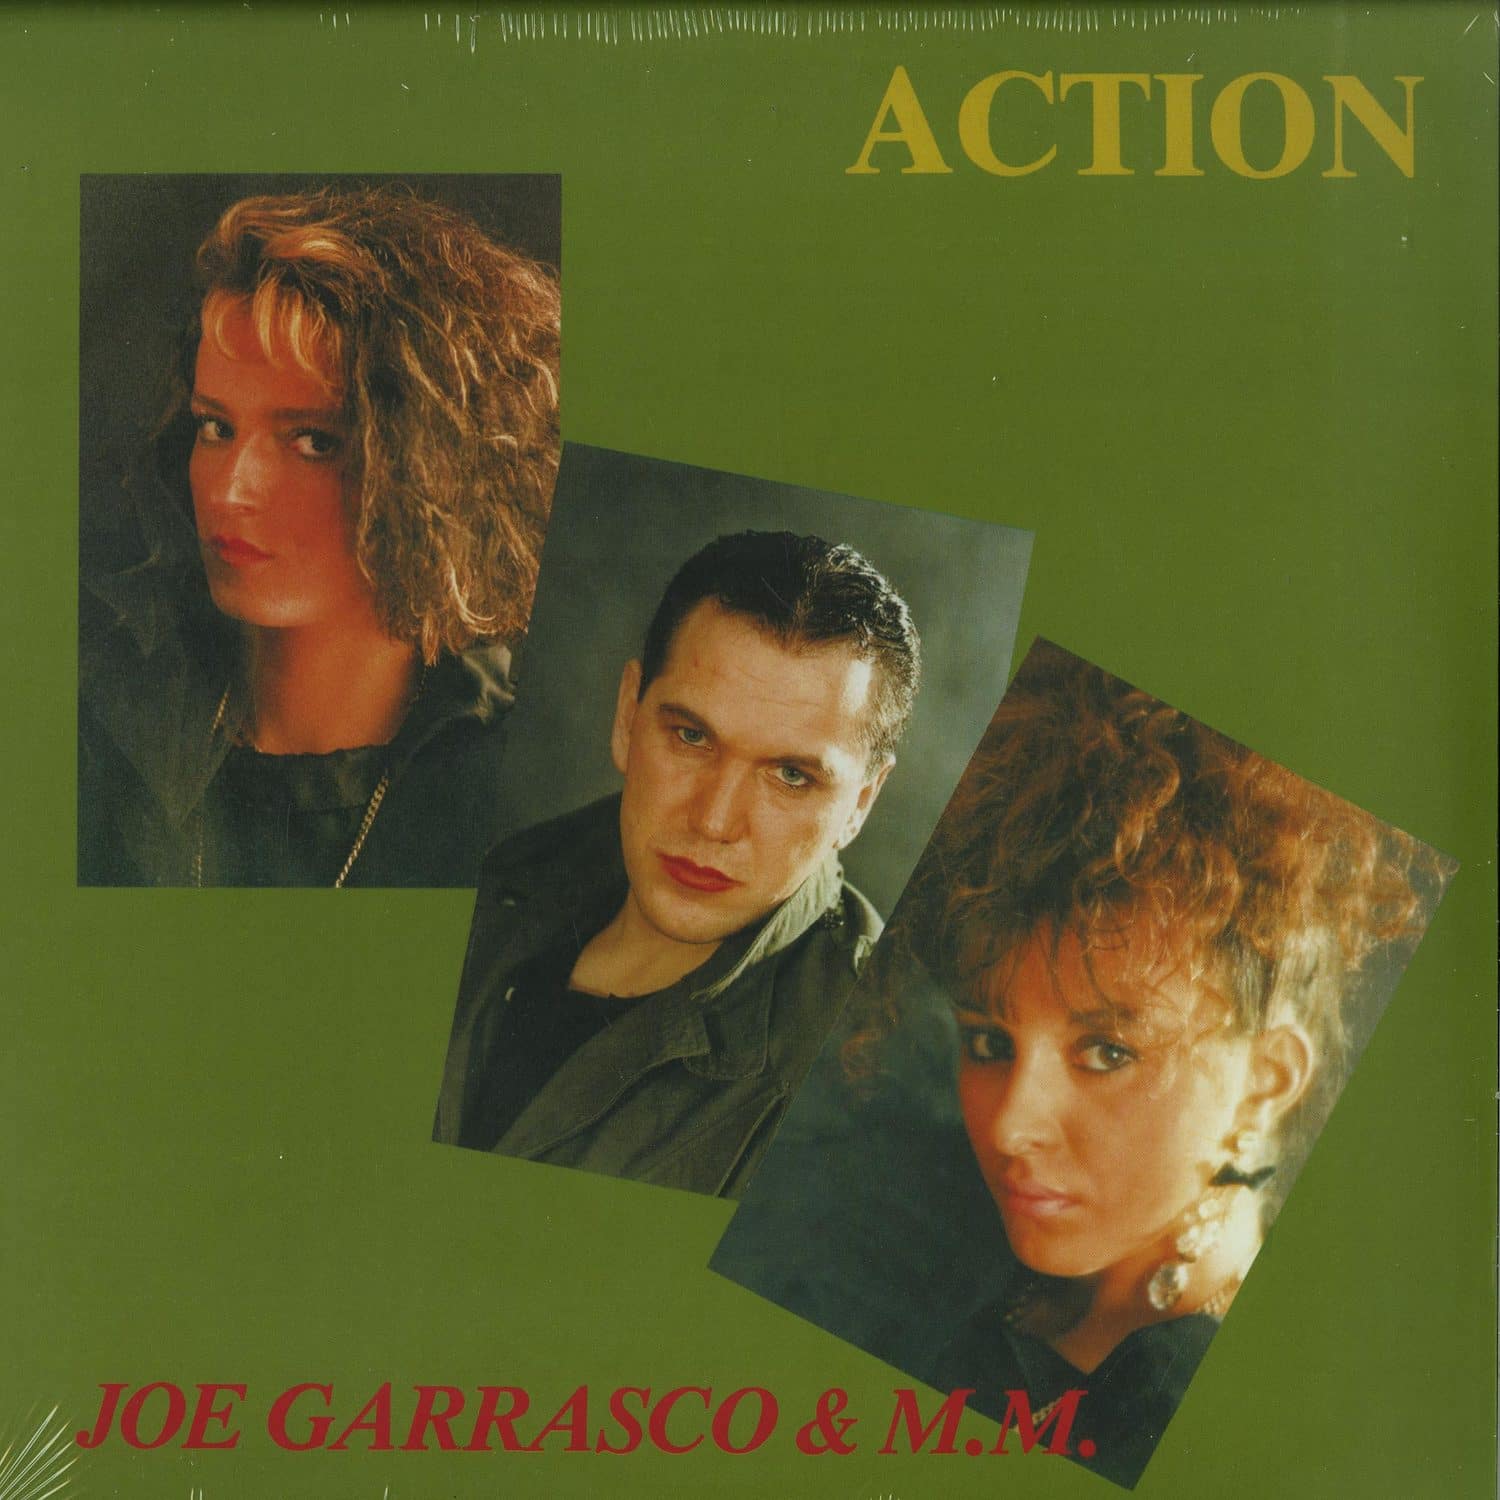 Joe Garrasco & M.M - ACTION EP